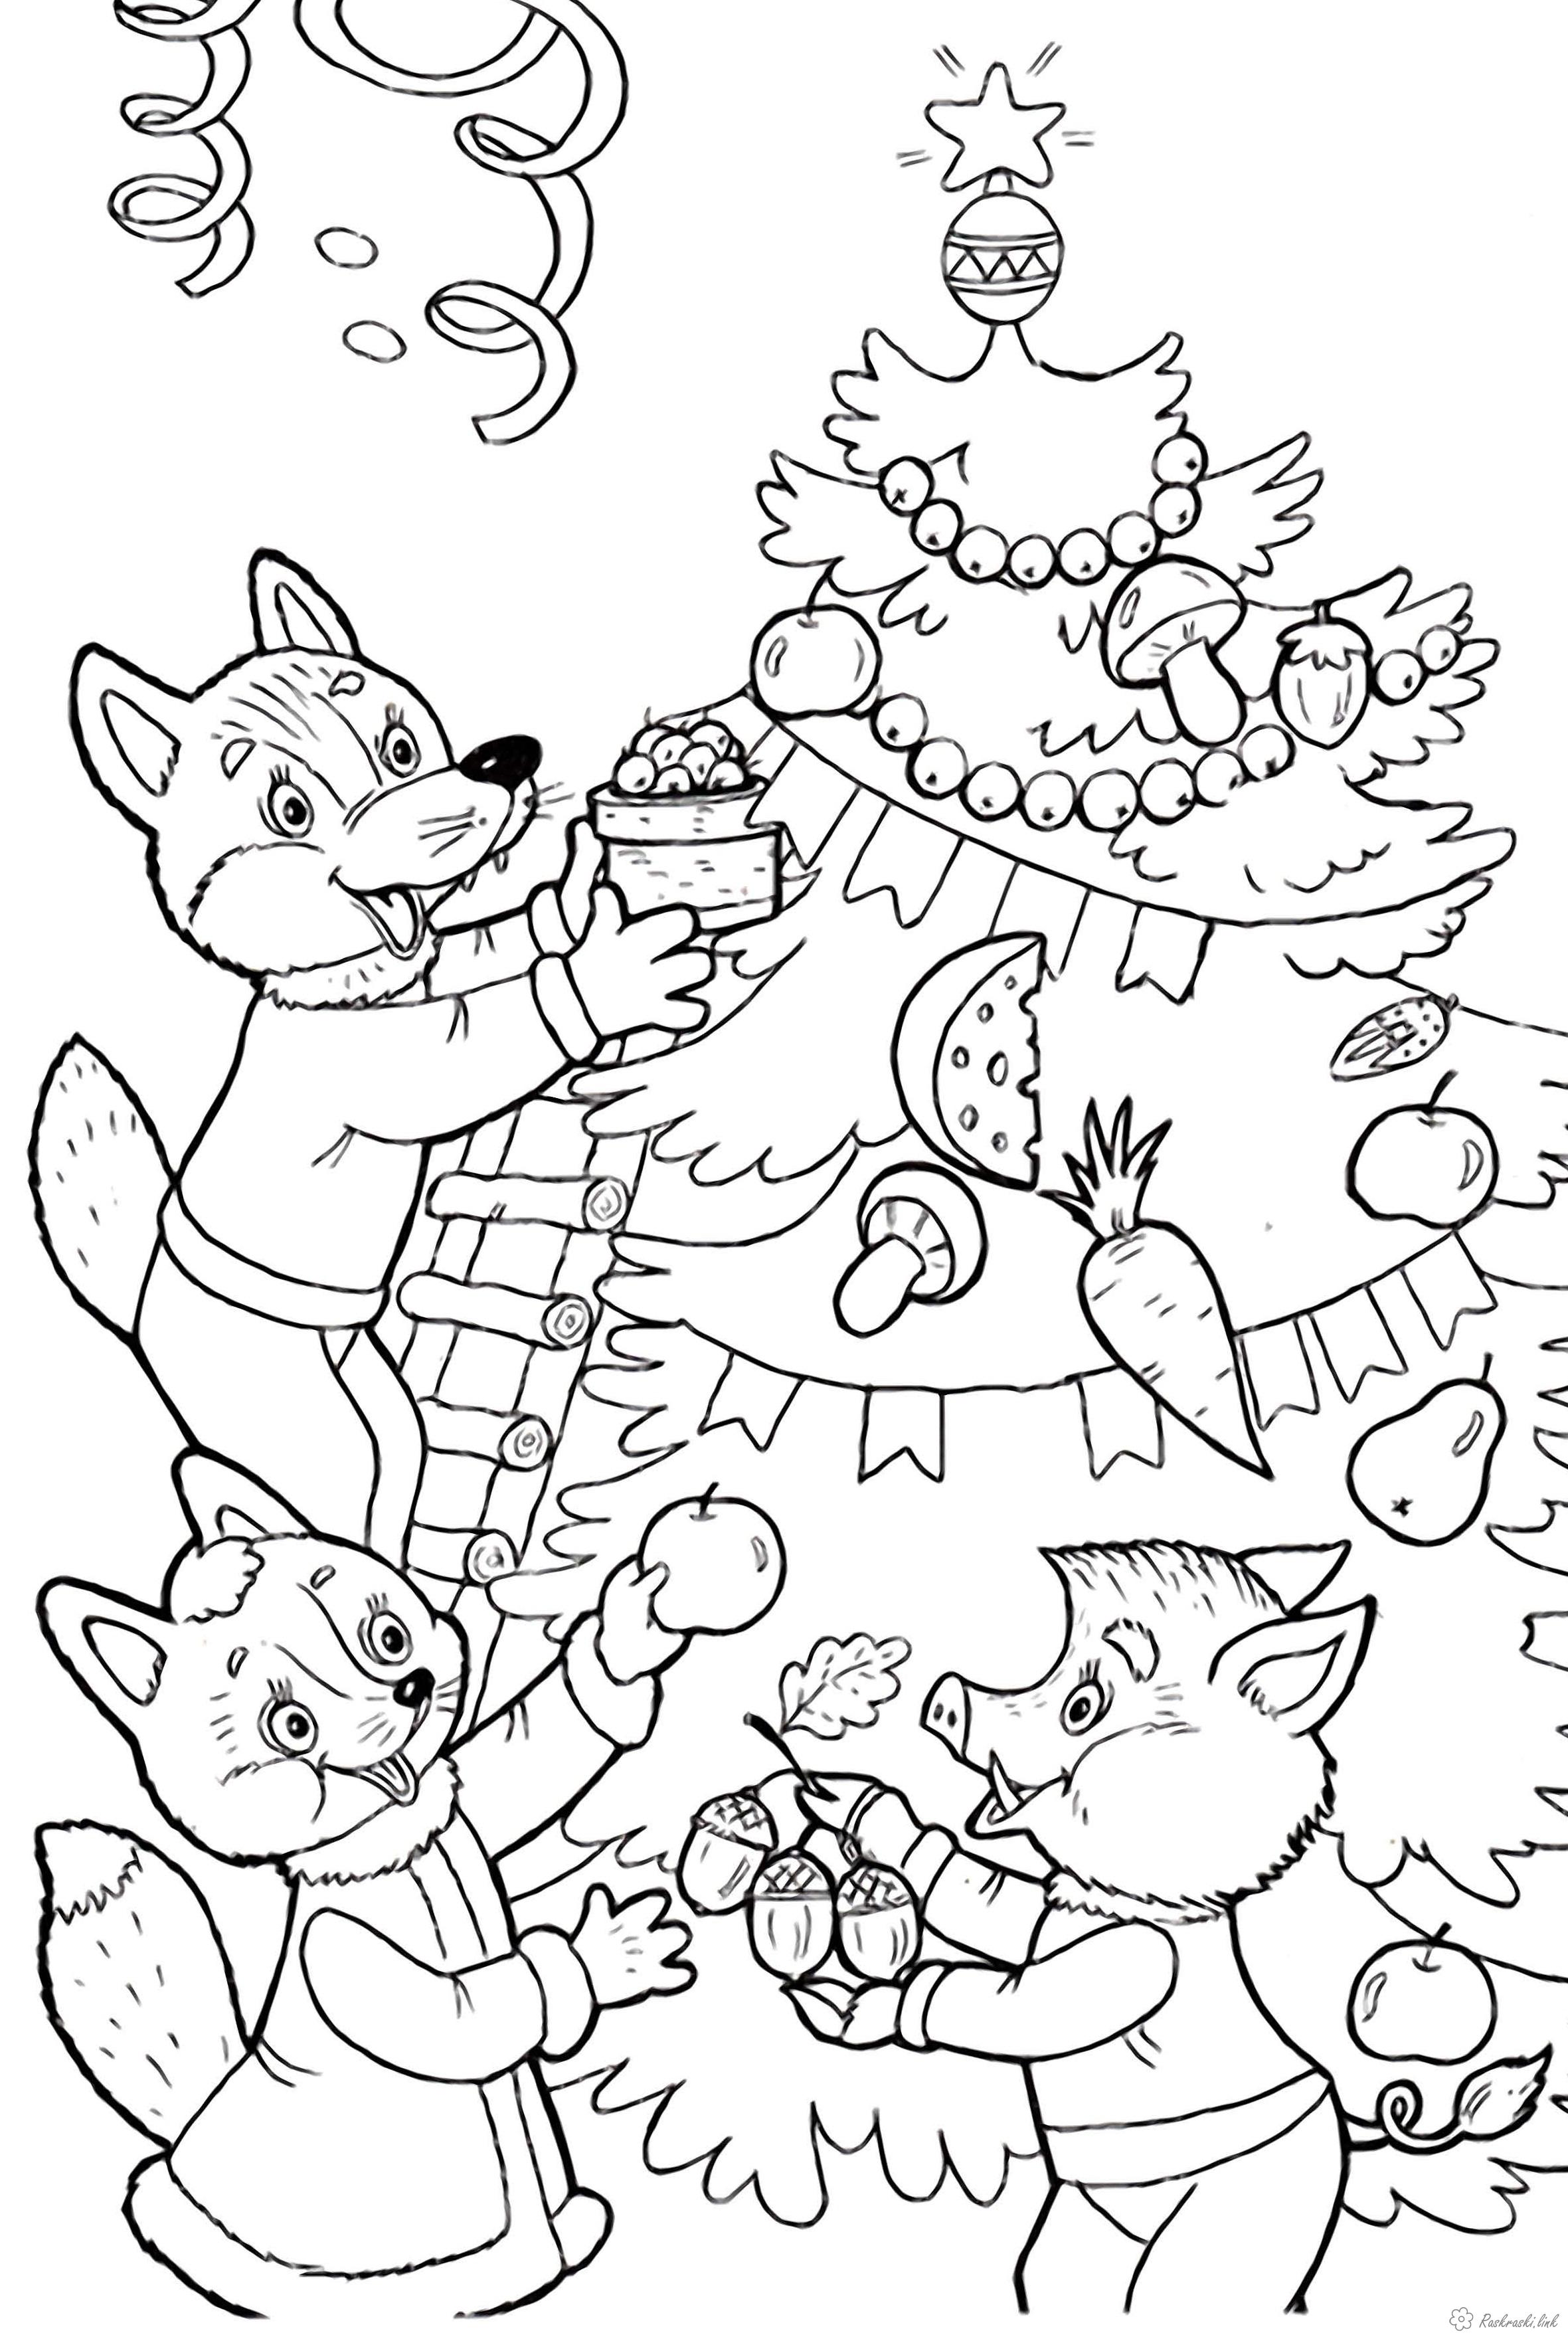 Розмальовки лисичка Розмальовка тварини, природа, лісові тварини, дикі тварини, розфарбування новий рік, ялинка, лисичка...